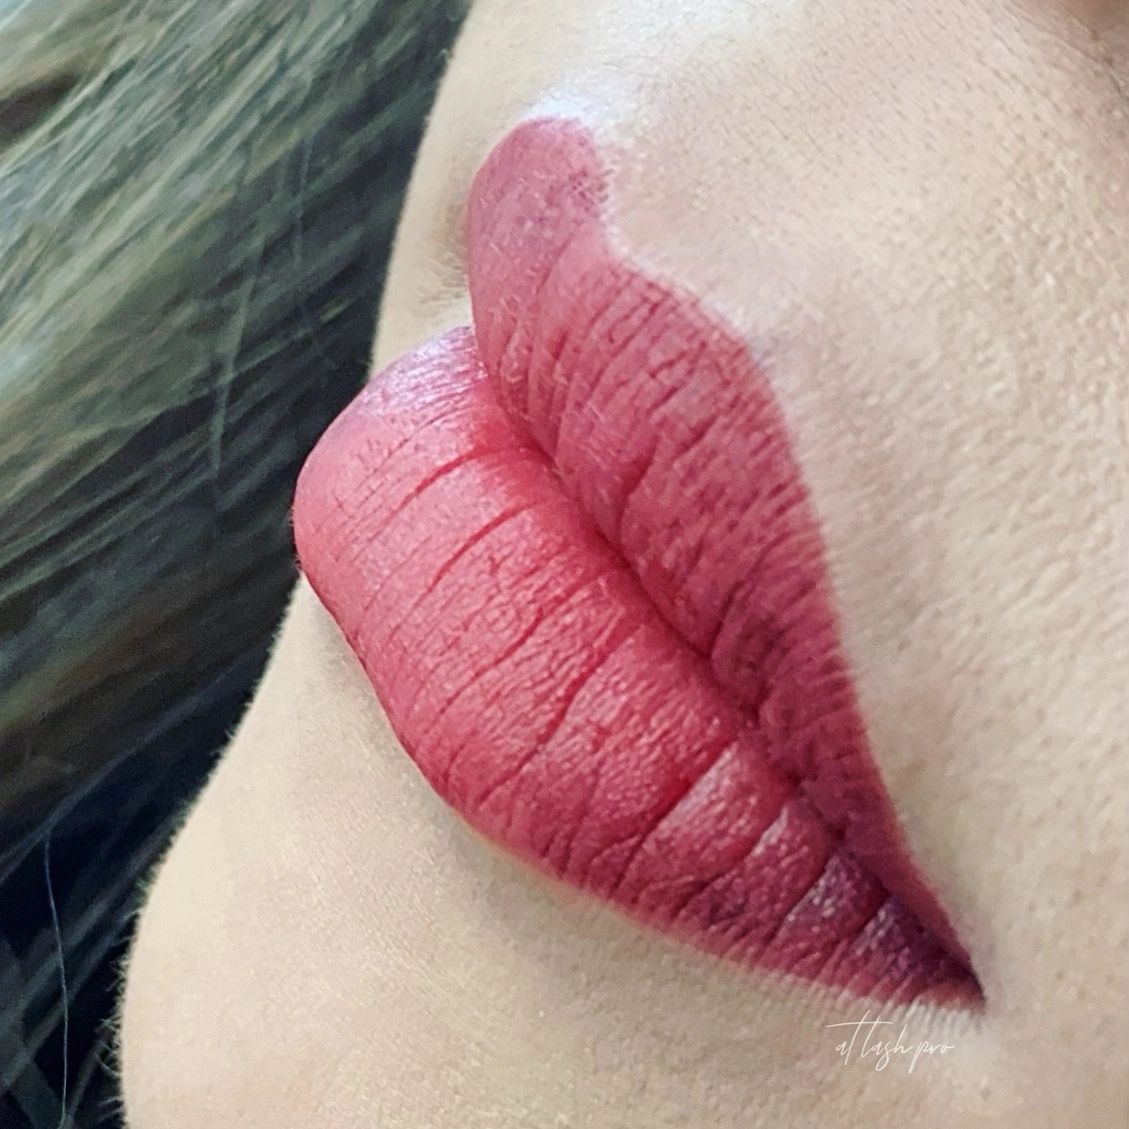 Lip blush done by Melissa with At Lash Pro at Lash Studio Tucson!